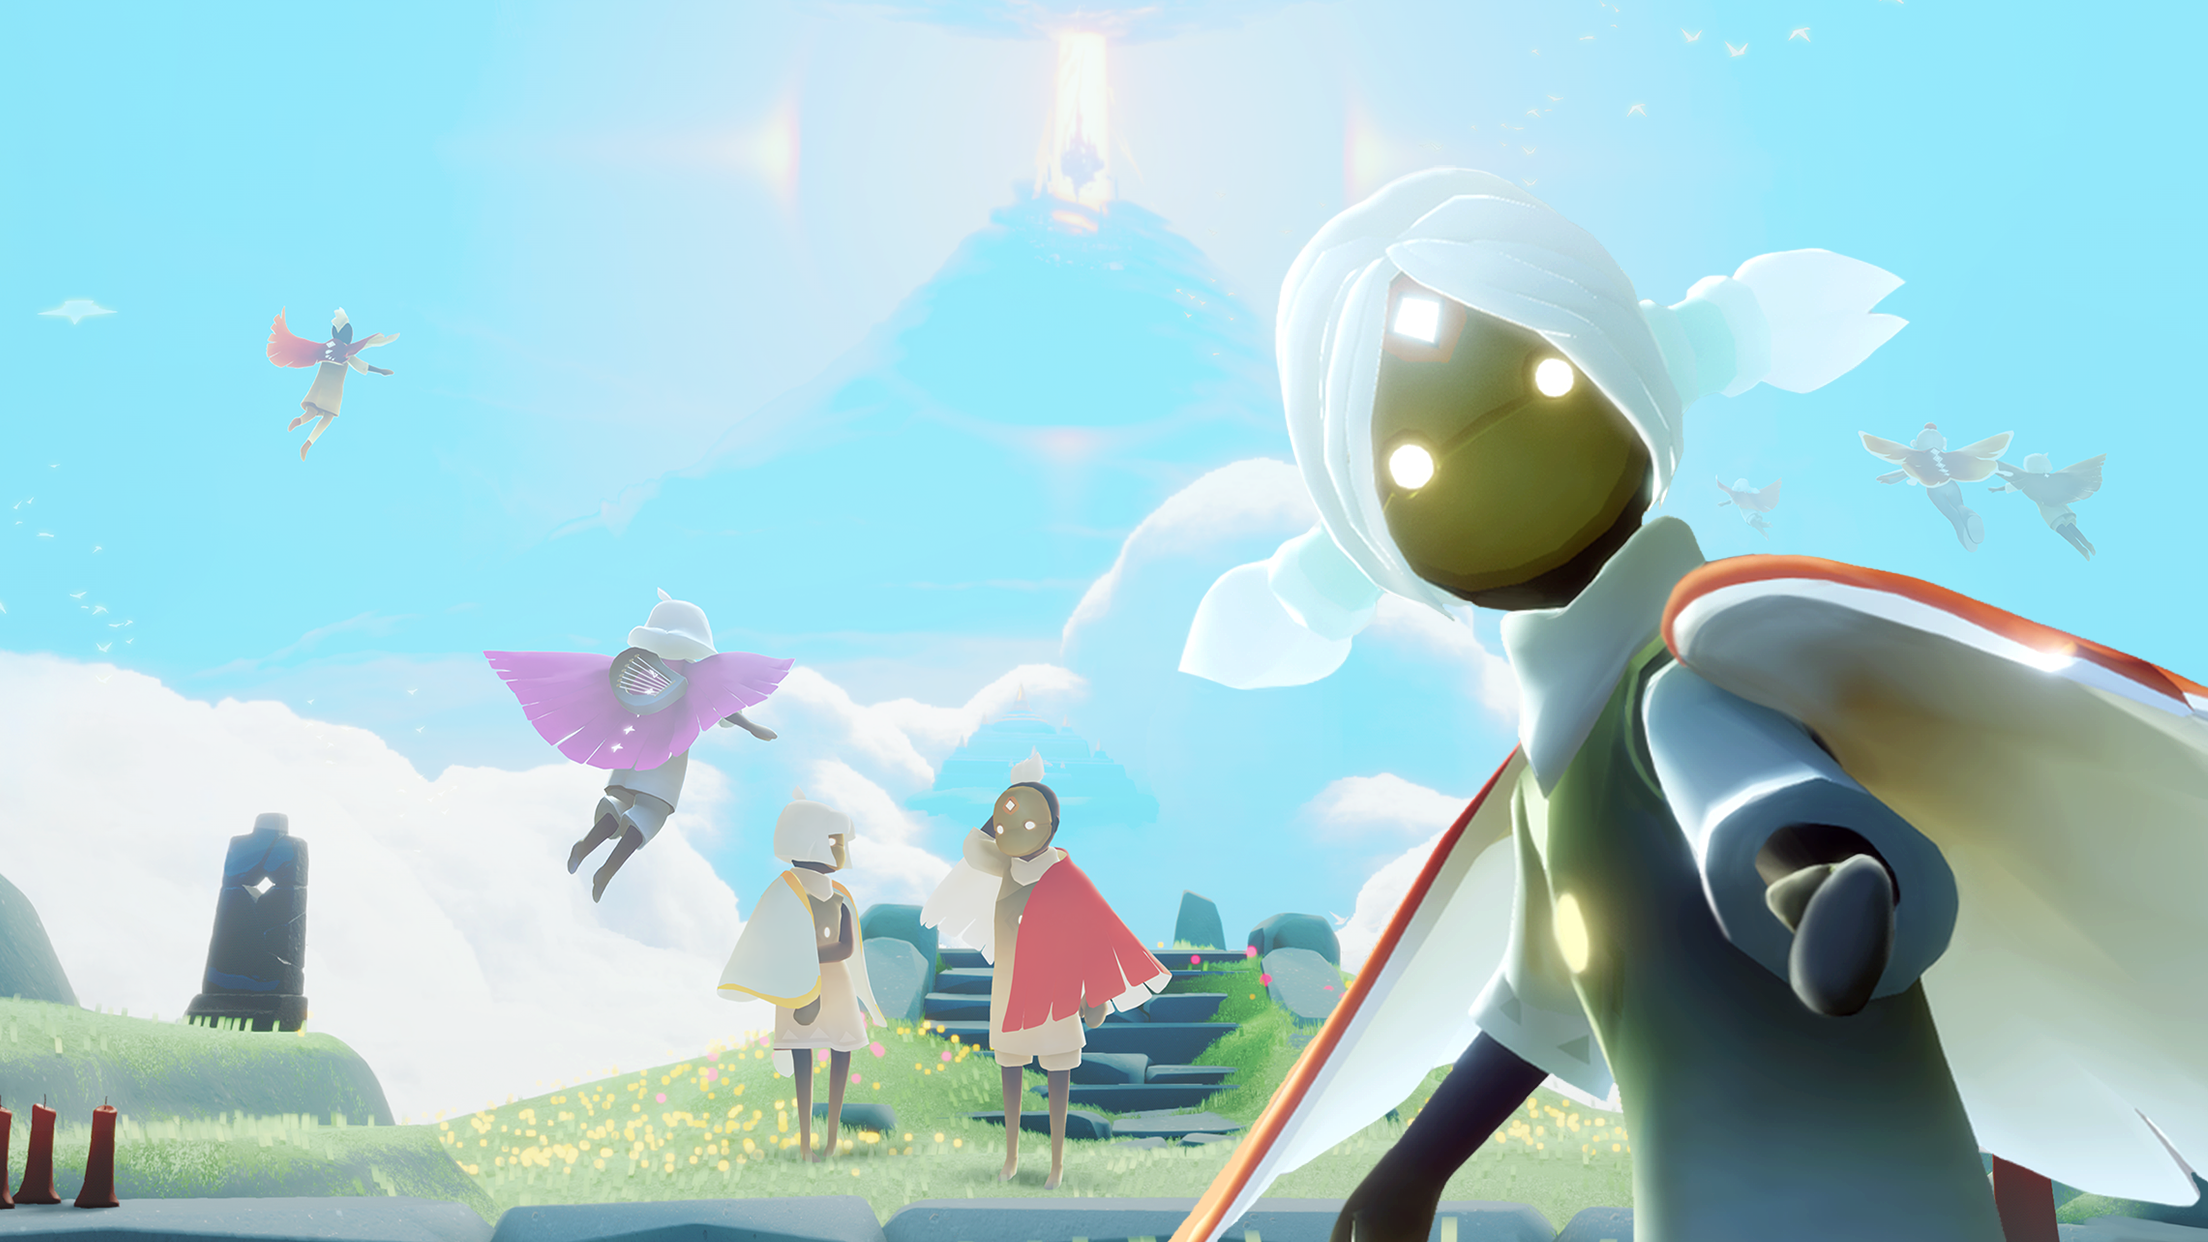 Google Play Best Games of 2020 - Winners (US) - Genshin Impact - Sky:  Children of the Light - Brawlhalla - TapTap